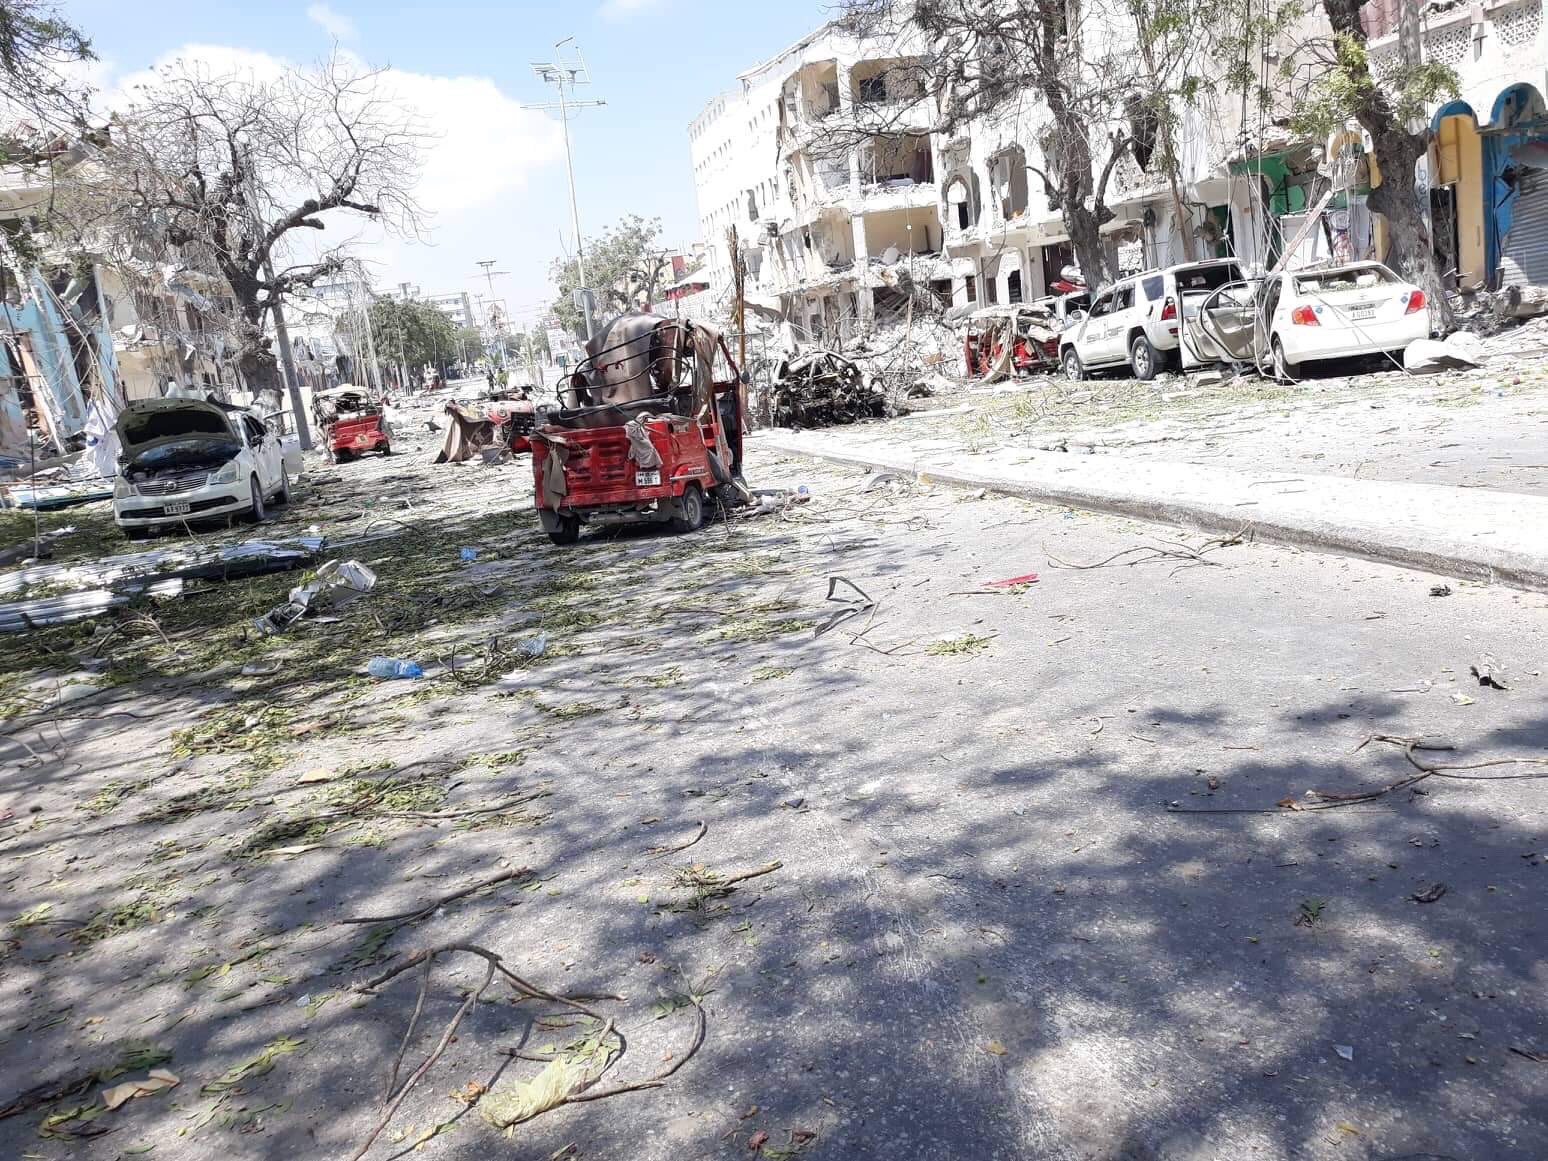 Al Shabaab attacked a hotel on Maka Al-mukarama street in Mogadishu, Somalia